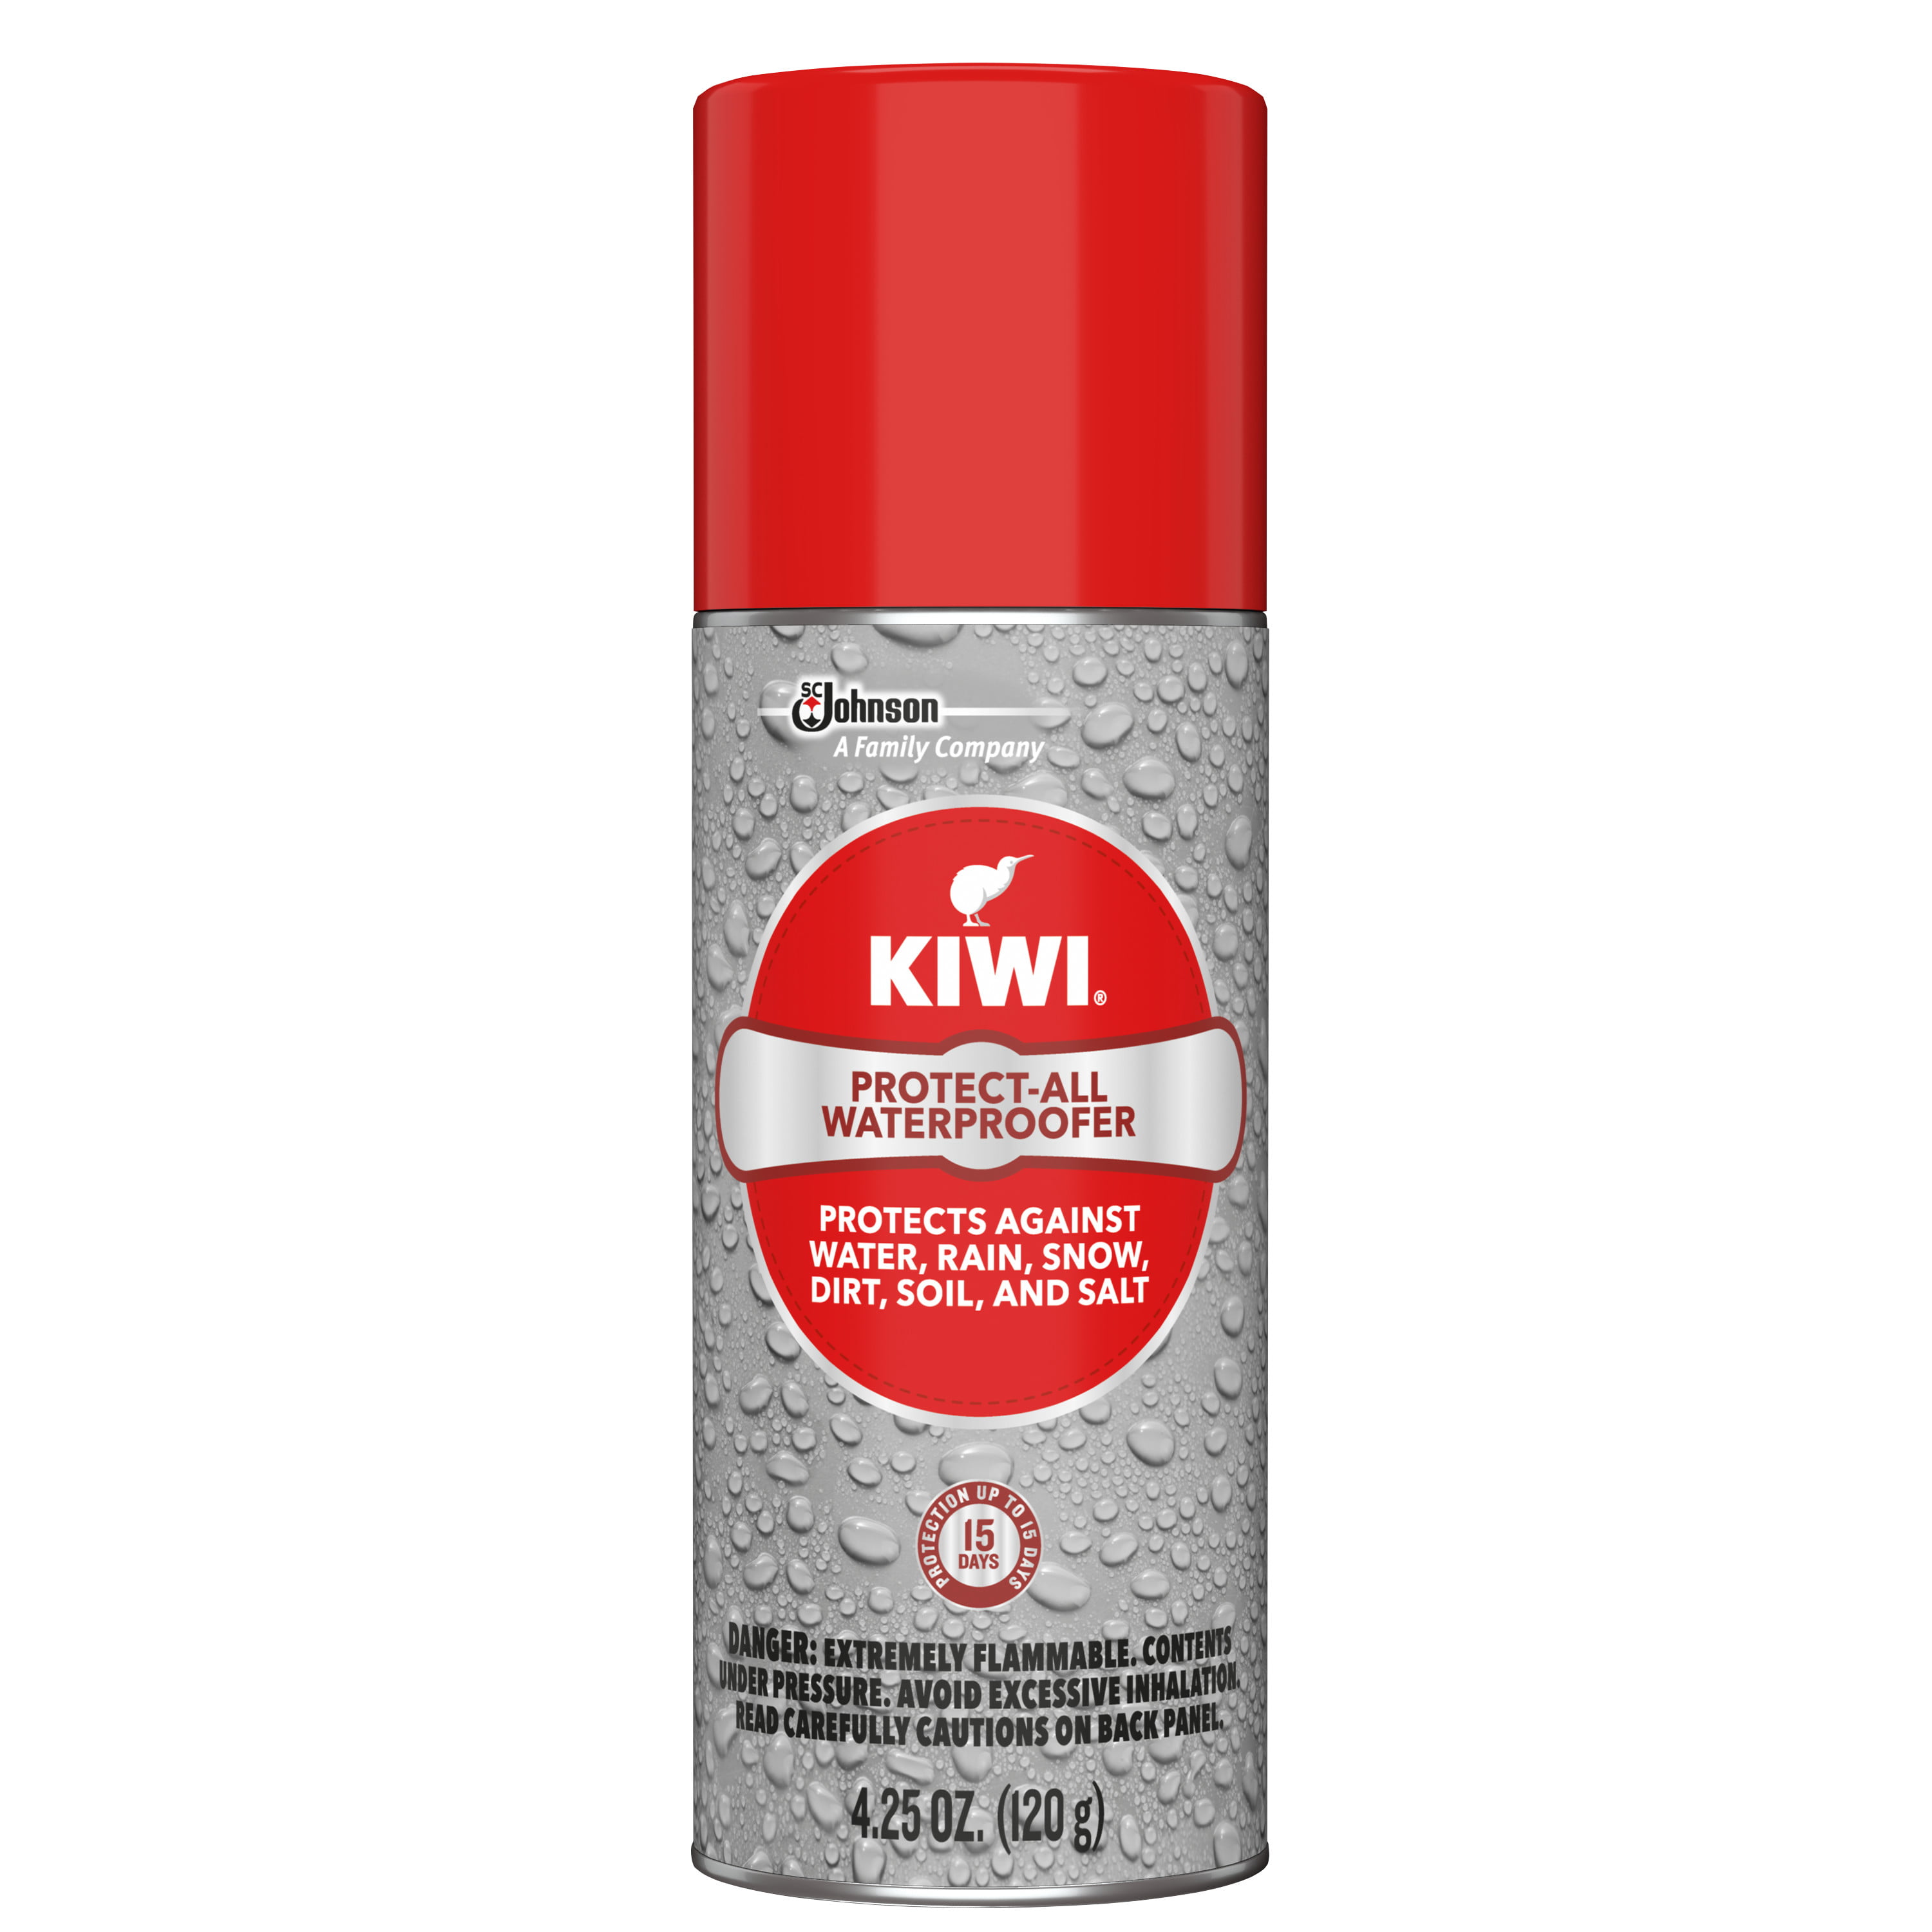 KIWI Protect-All Waterproofer Spray, 4 